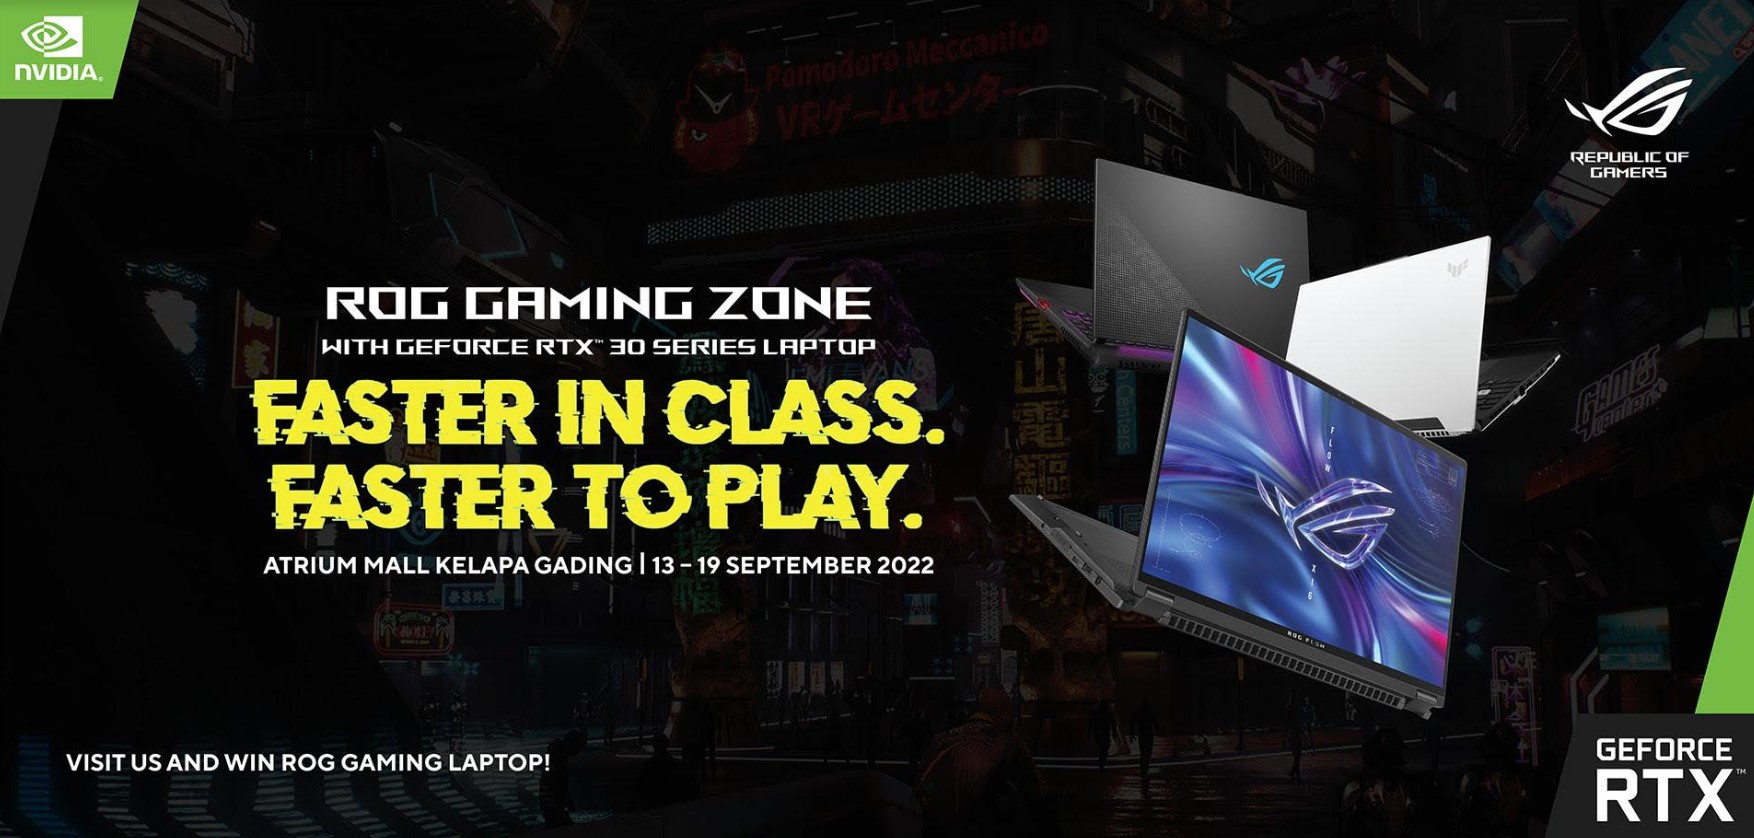 ASUS ROG Gandeng NVIDIA, Gelar ROG Gaming Zone with GeForce RTX 30 Series